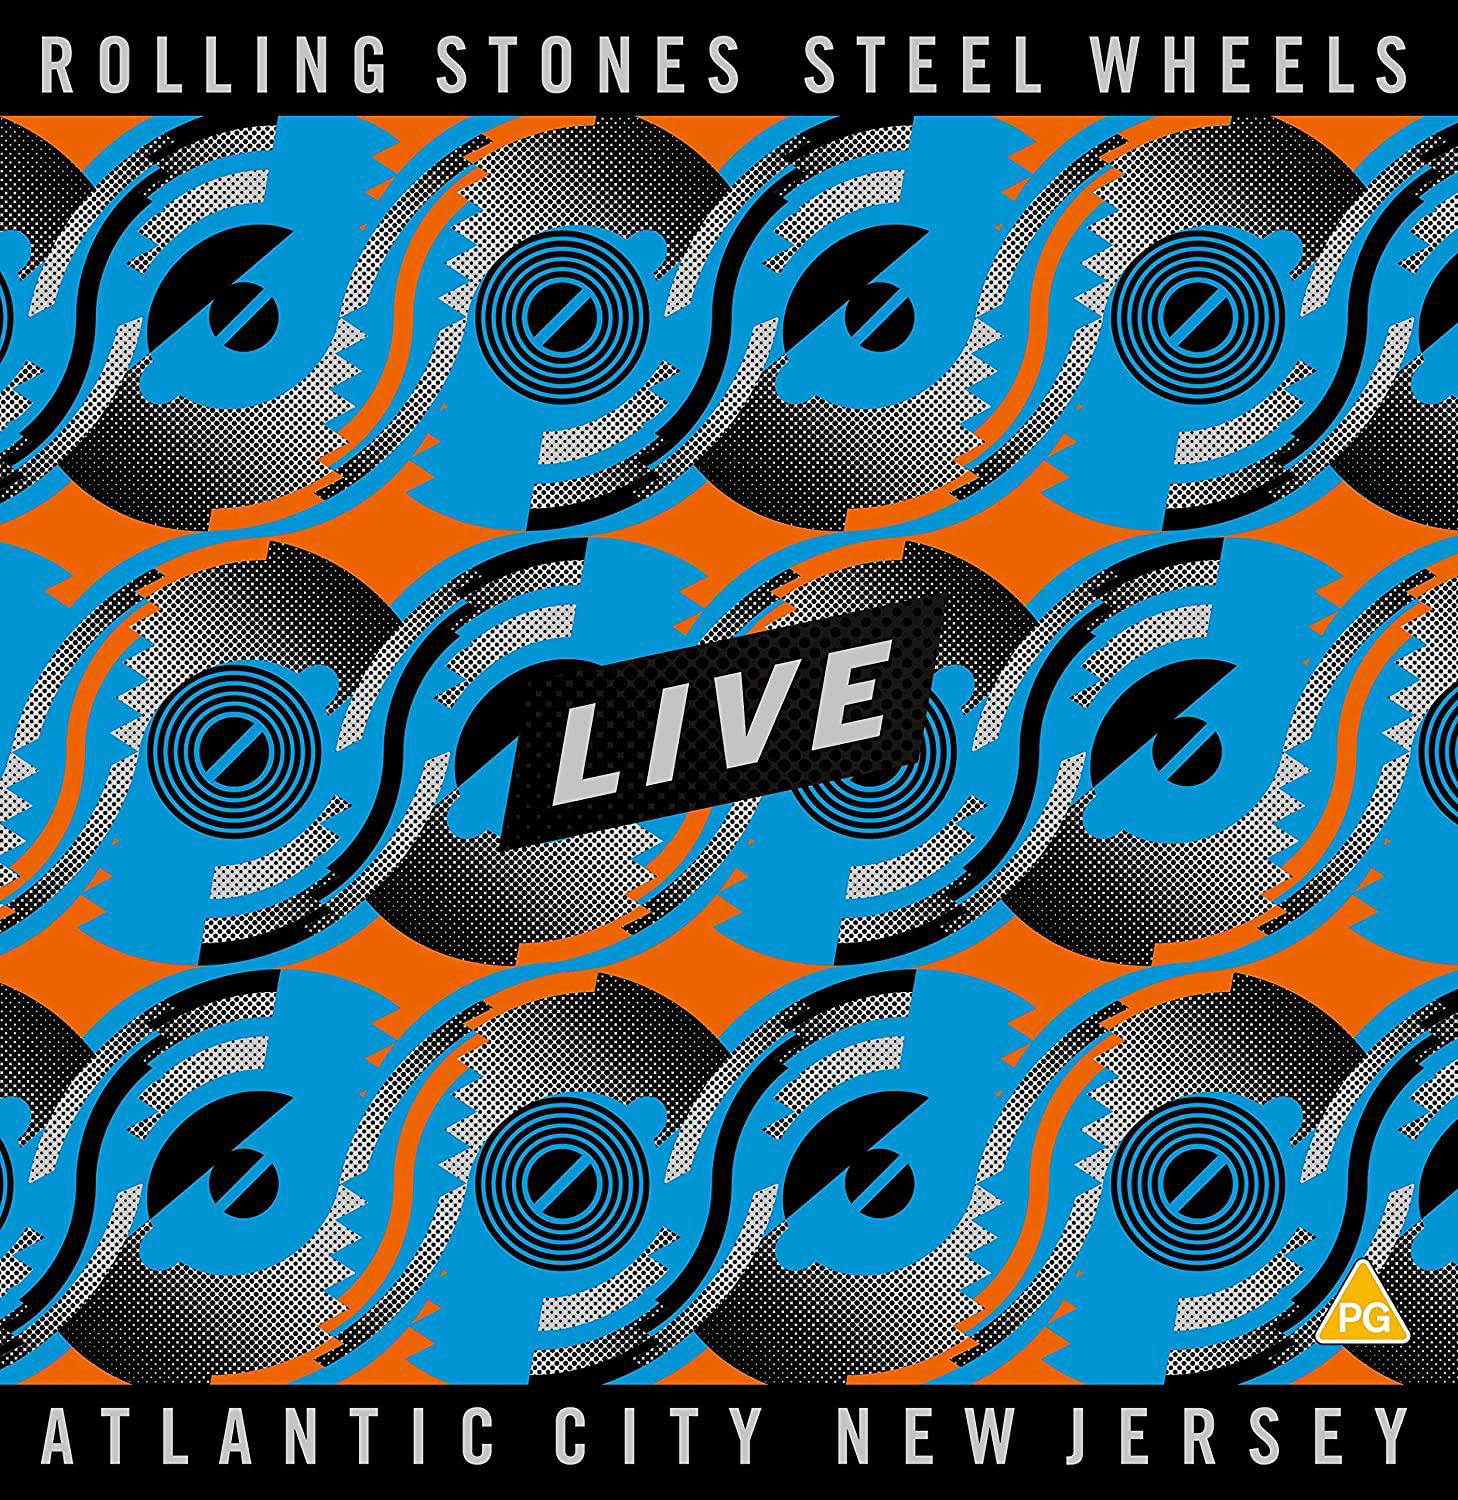 The Rolling Stones - (Blu-ray) City (Atlantic Live Wheels - 1989,Blu-Ray) Steel